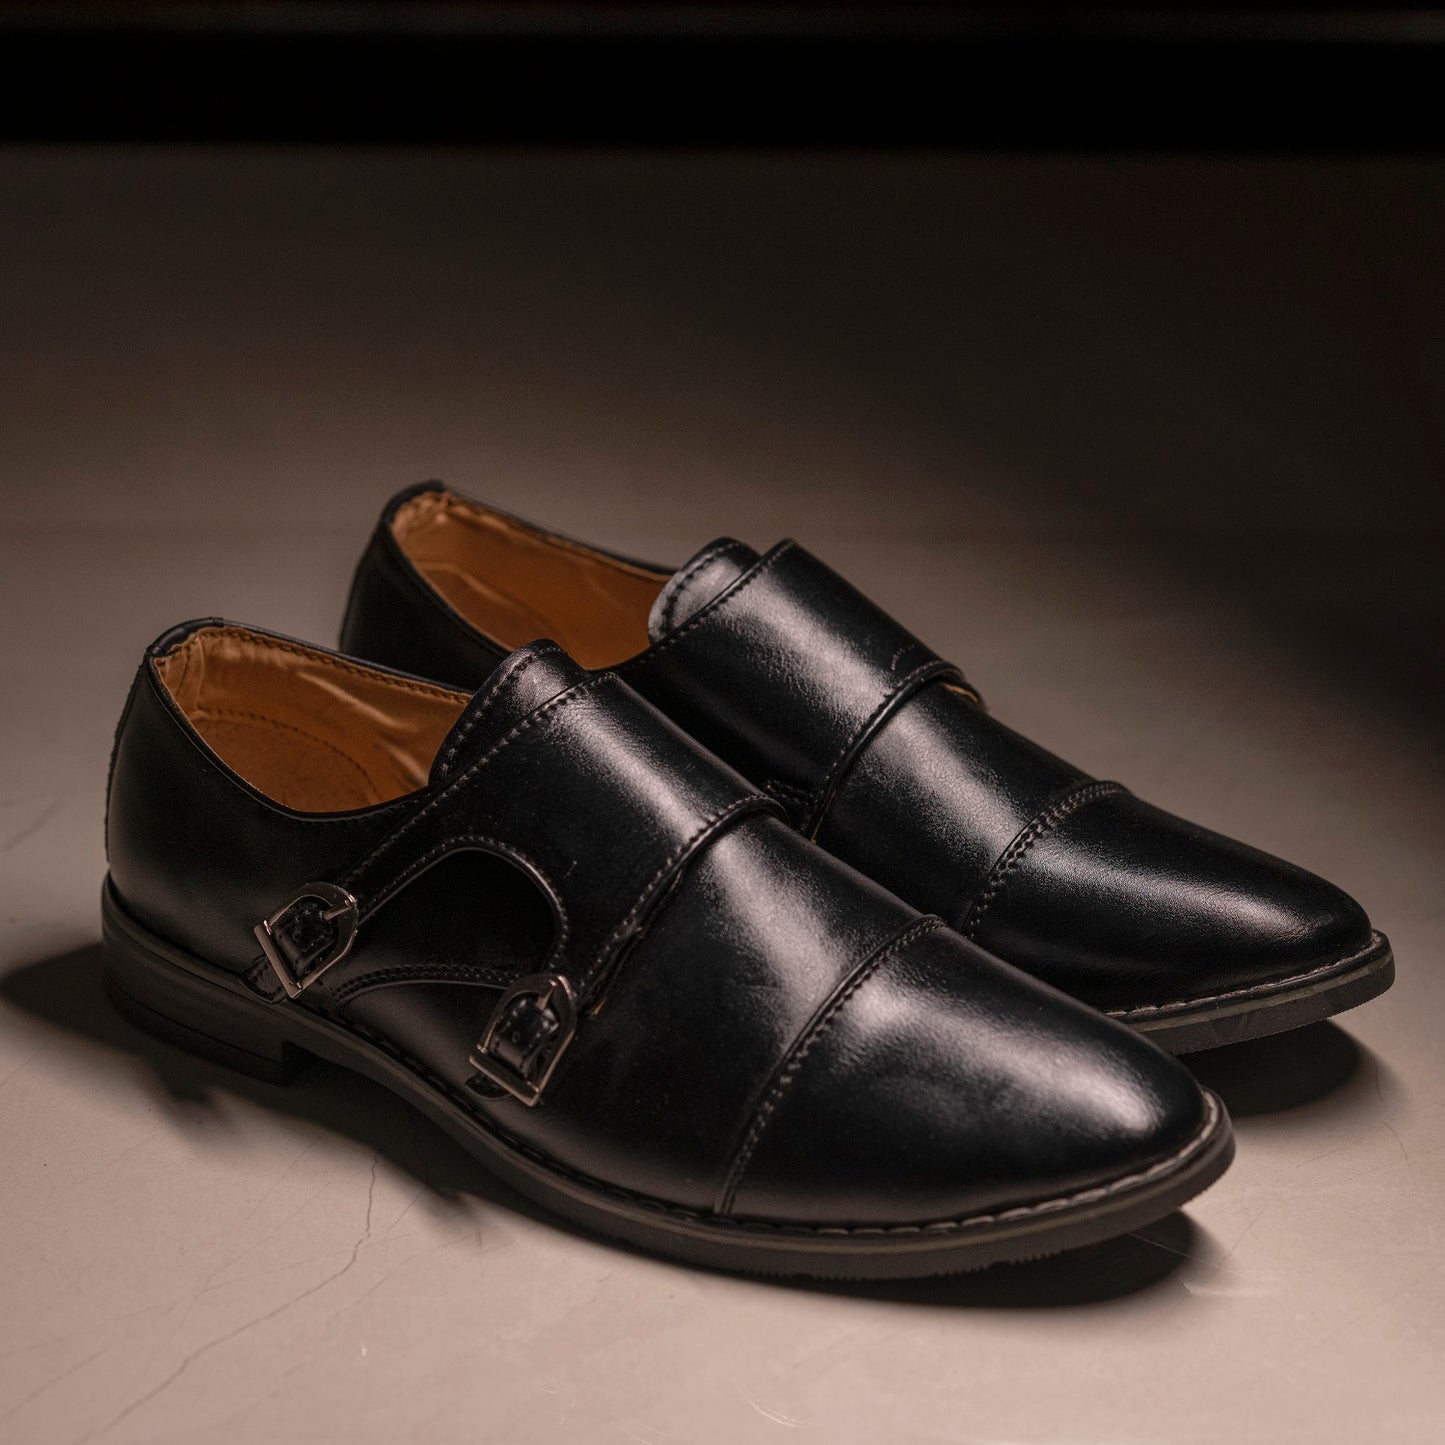 The Aurous Zeus Handcrafted Tan Double Monk Formal Shoes - Black